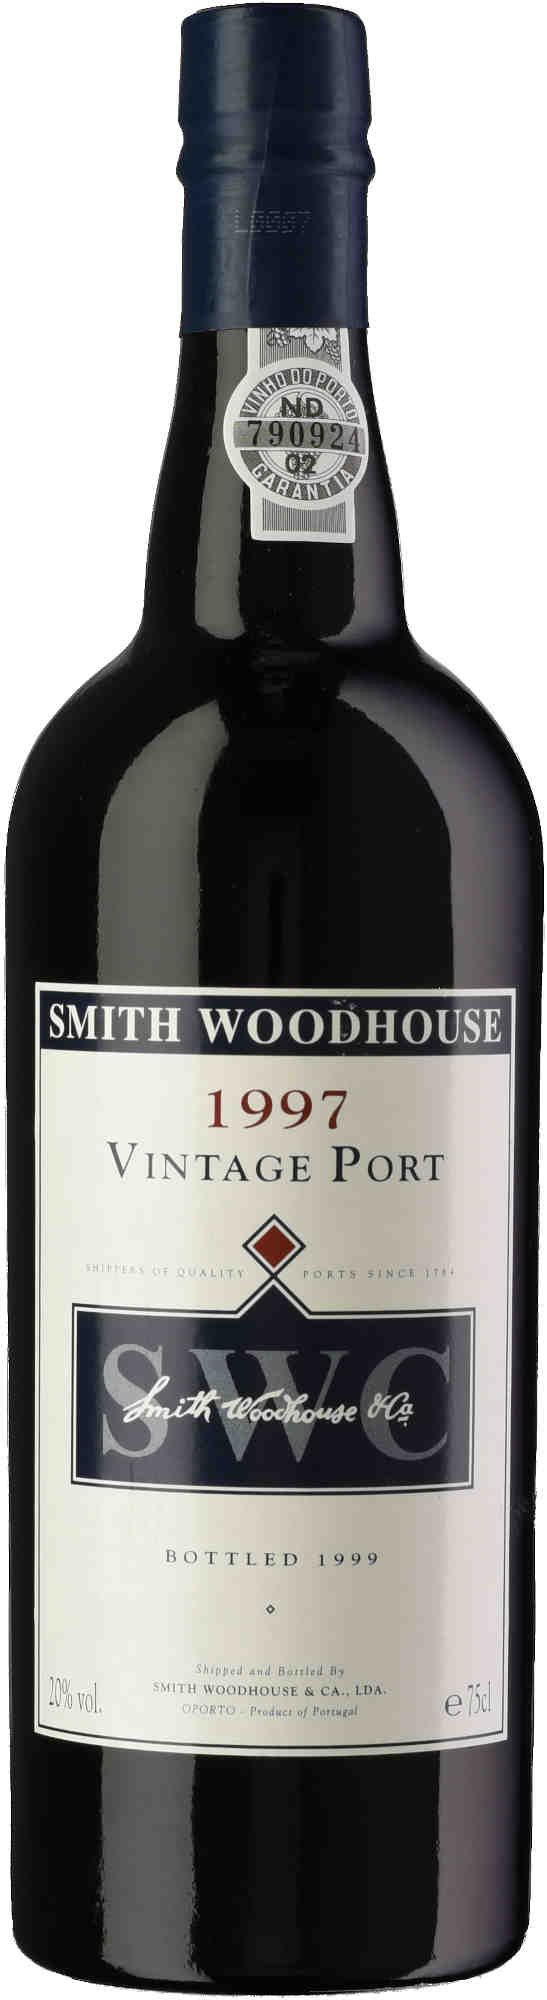 Smith-Woodhouse-Vintage-Port-1997